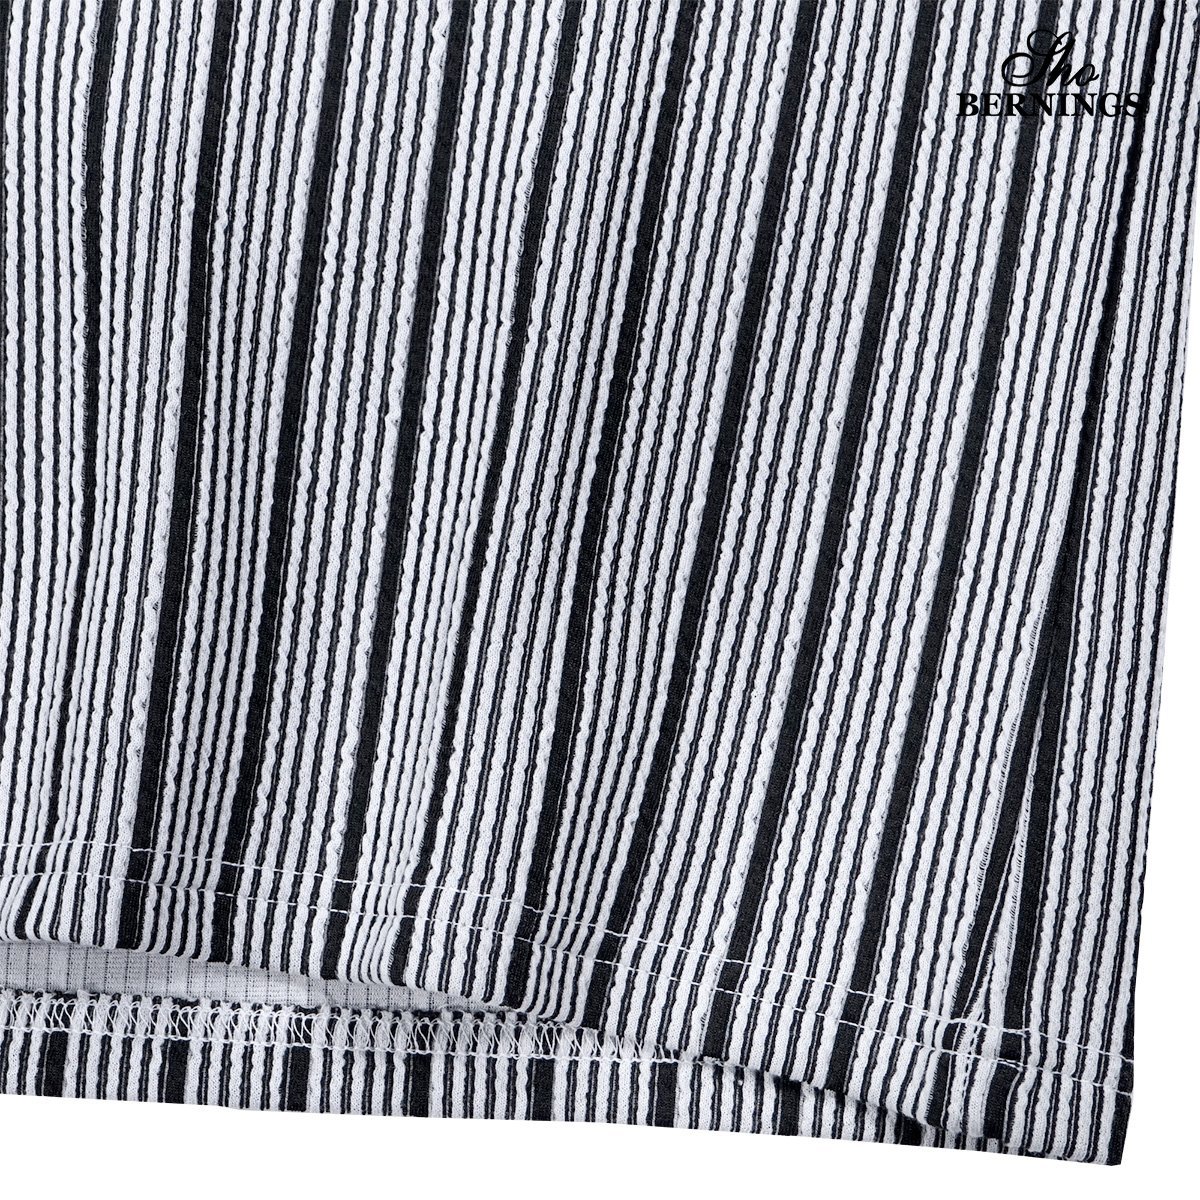 303922-01 Bernings sho Tシャツ Vネック オルタネートストライプ柄 メンズ シンプル 半袖 (ホワイト白ブラック黒) XL カットソー トップス_画像6